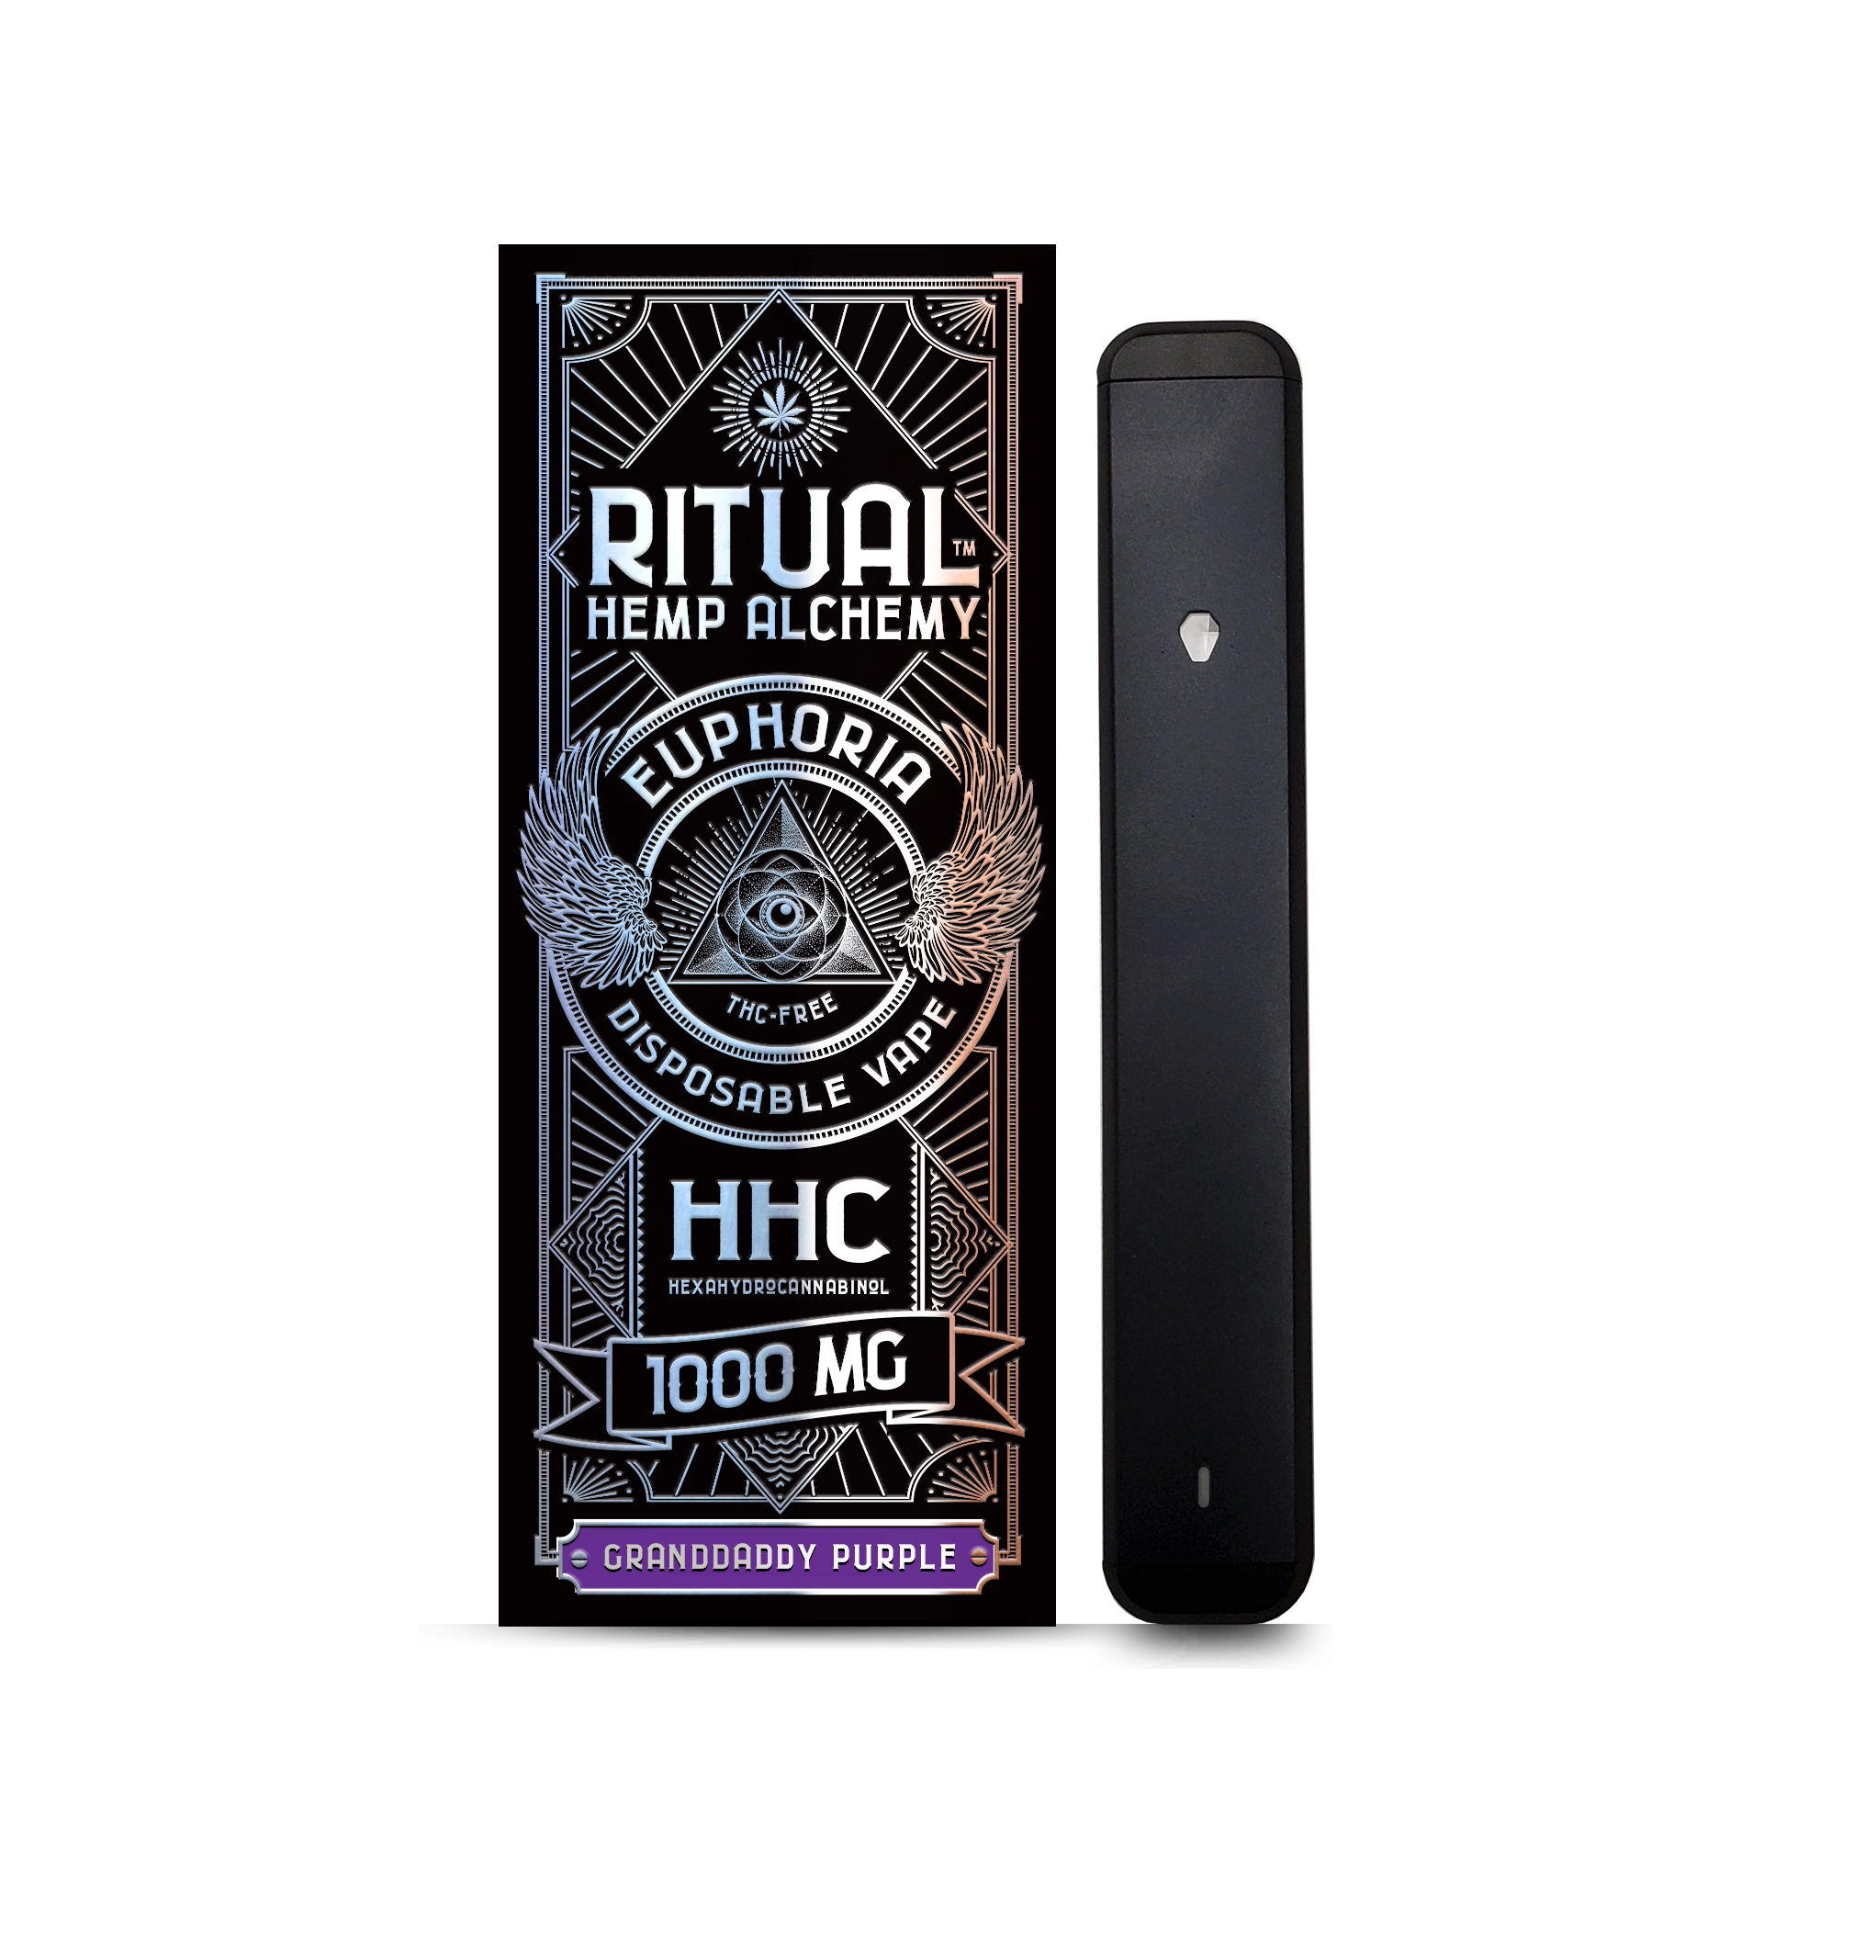 Ritual-Hemp-Alchemy-1000mg-HHC-Disposable-Vape-Pen-Granddaddy-Purple